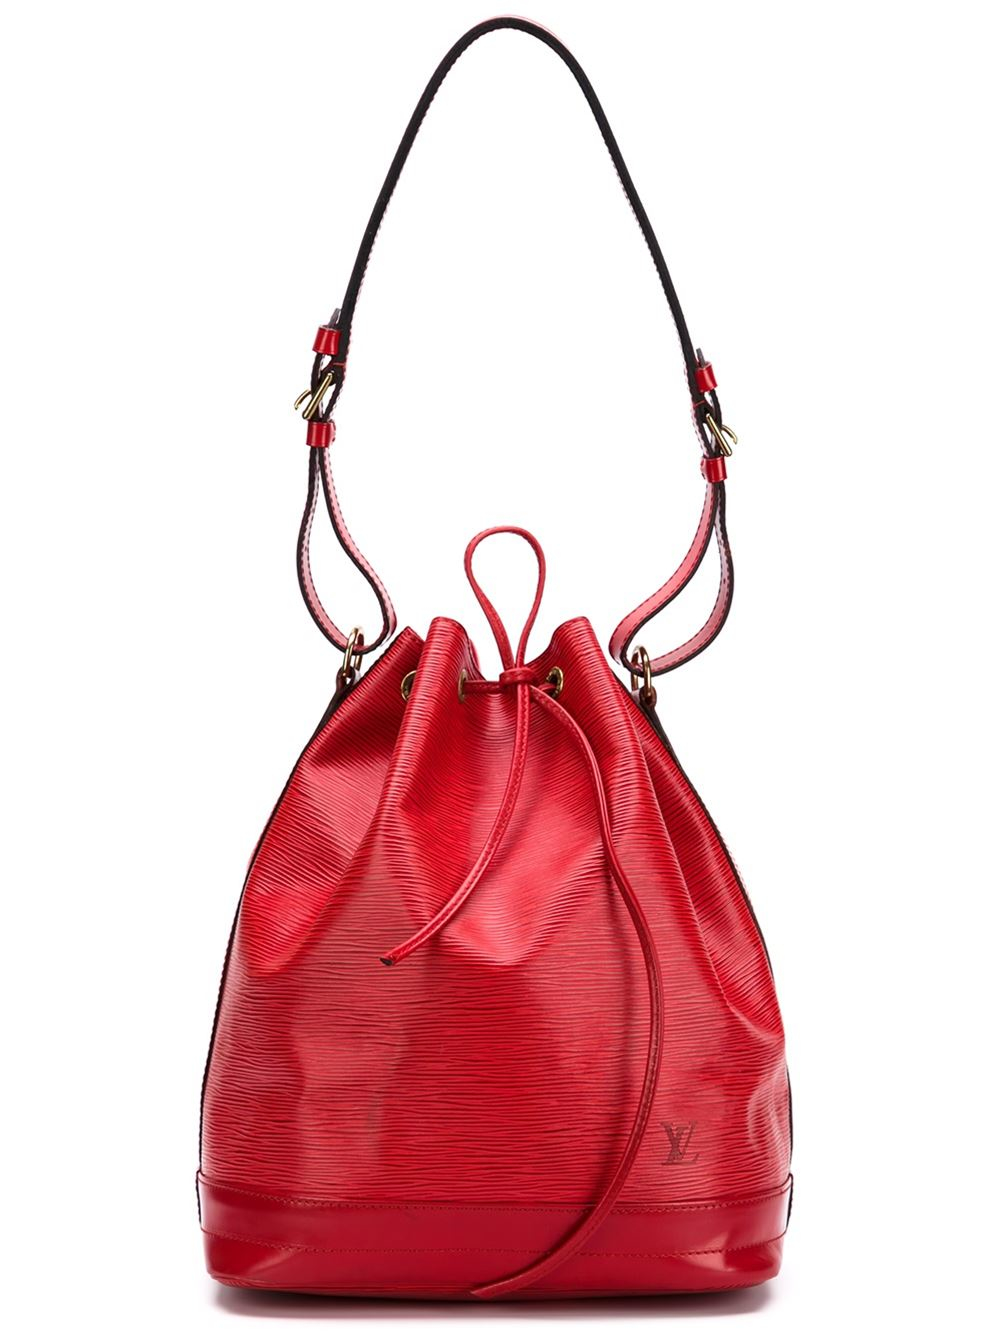 Louis Vuitton Red Plastic Bag | IQS Executive